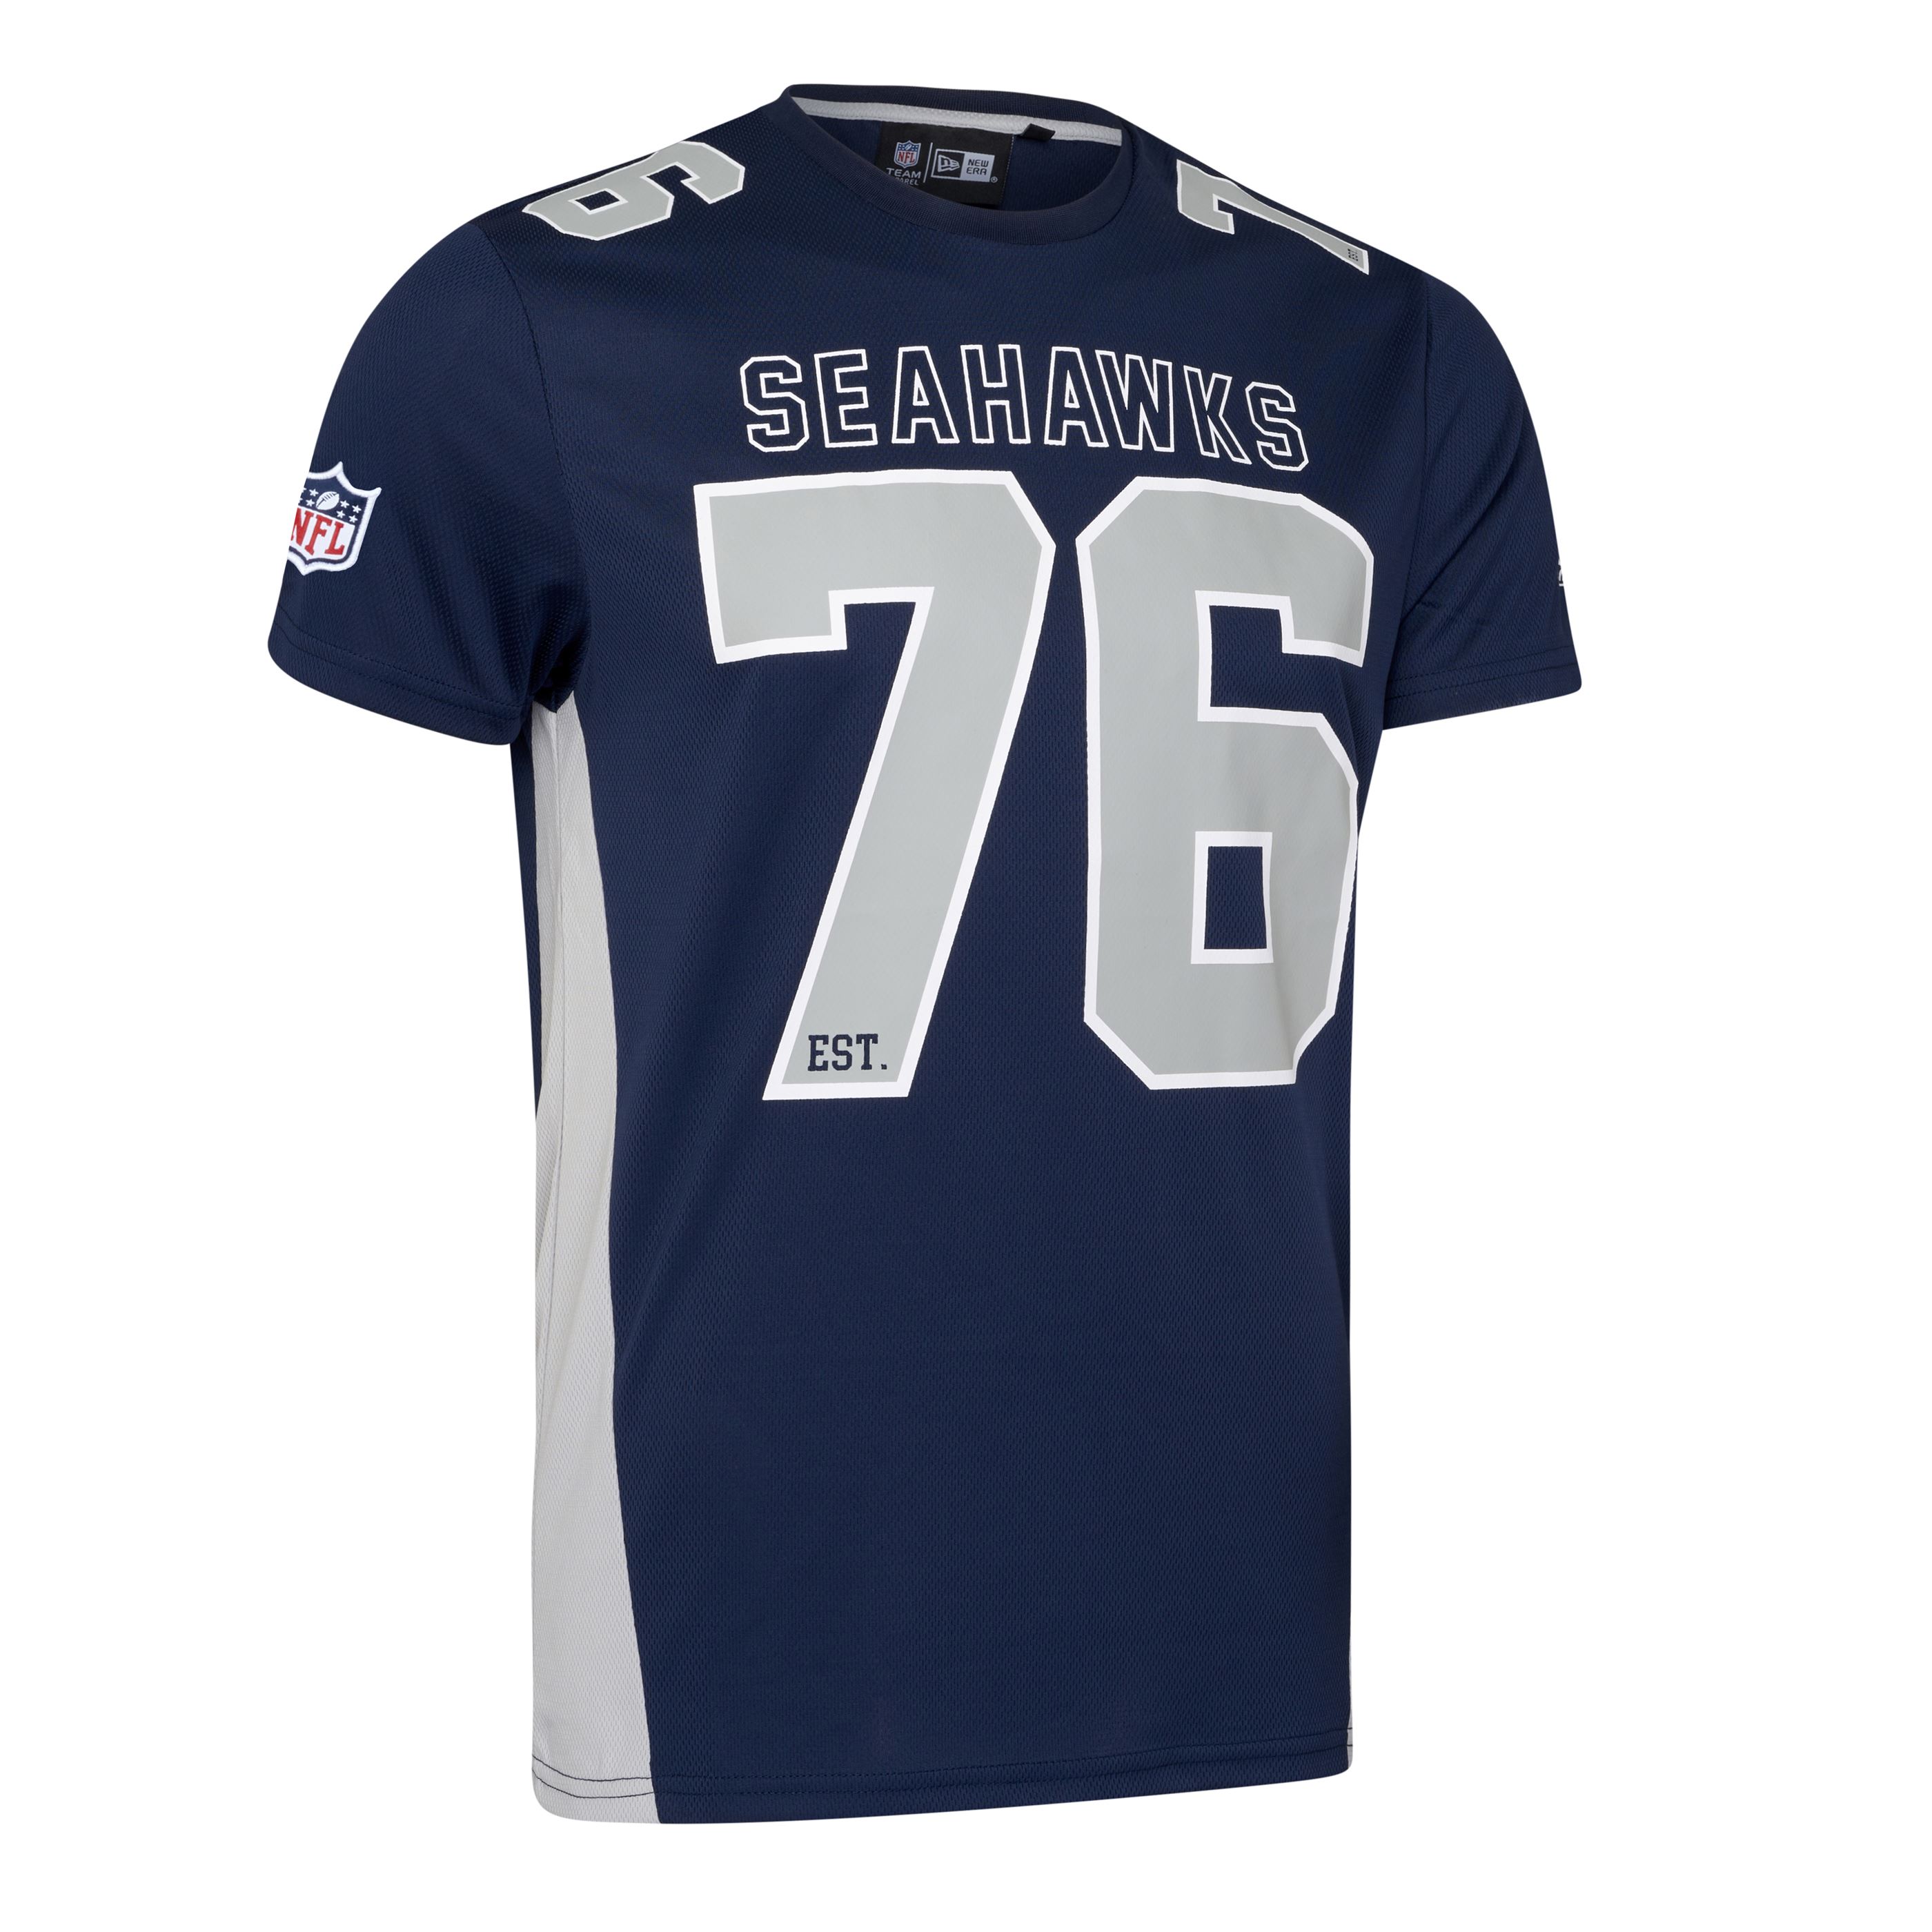 Seattle Seahawks NFL Established Number Mesh Tee Blue T-Shirt New Era